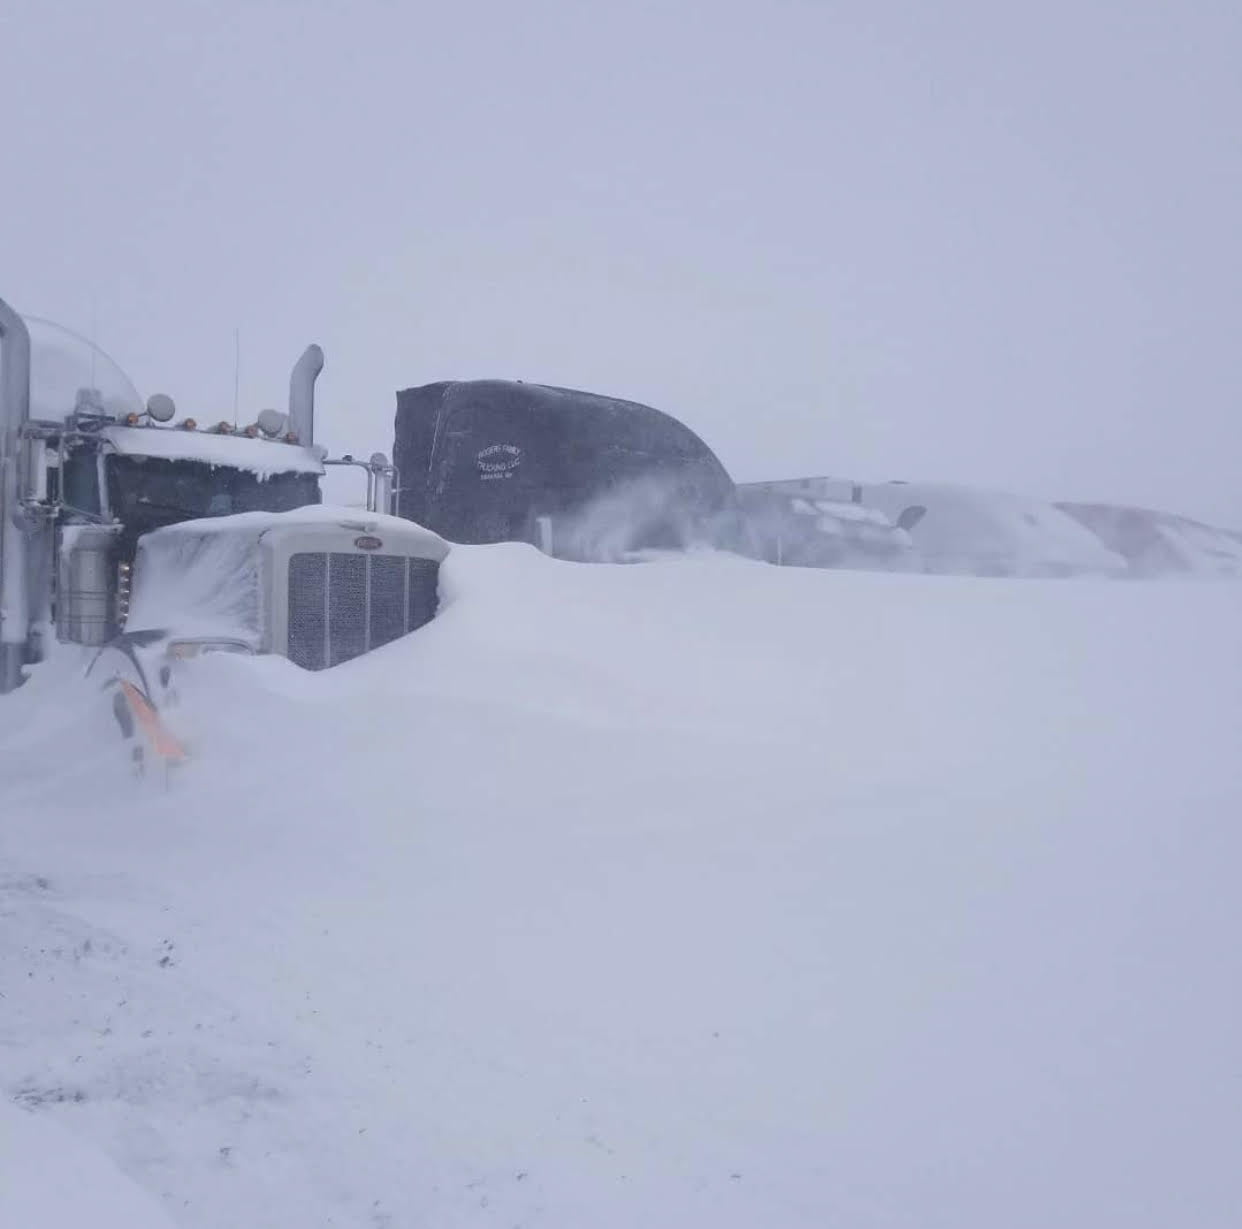 Winter Storm Landon Brings Travel Bans, Restrictions